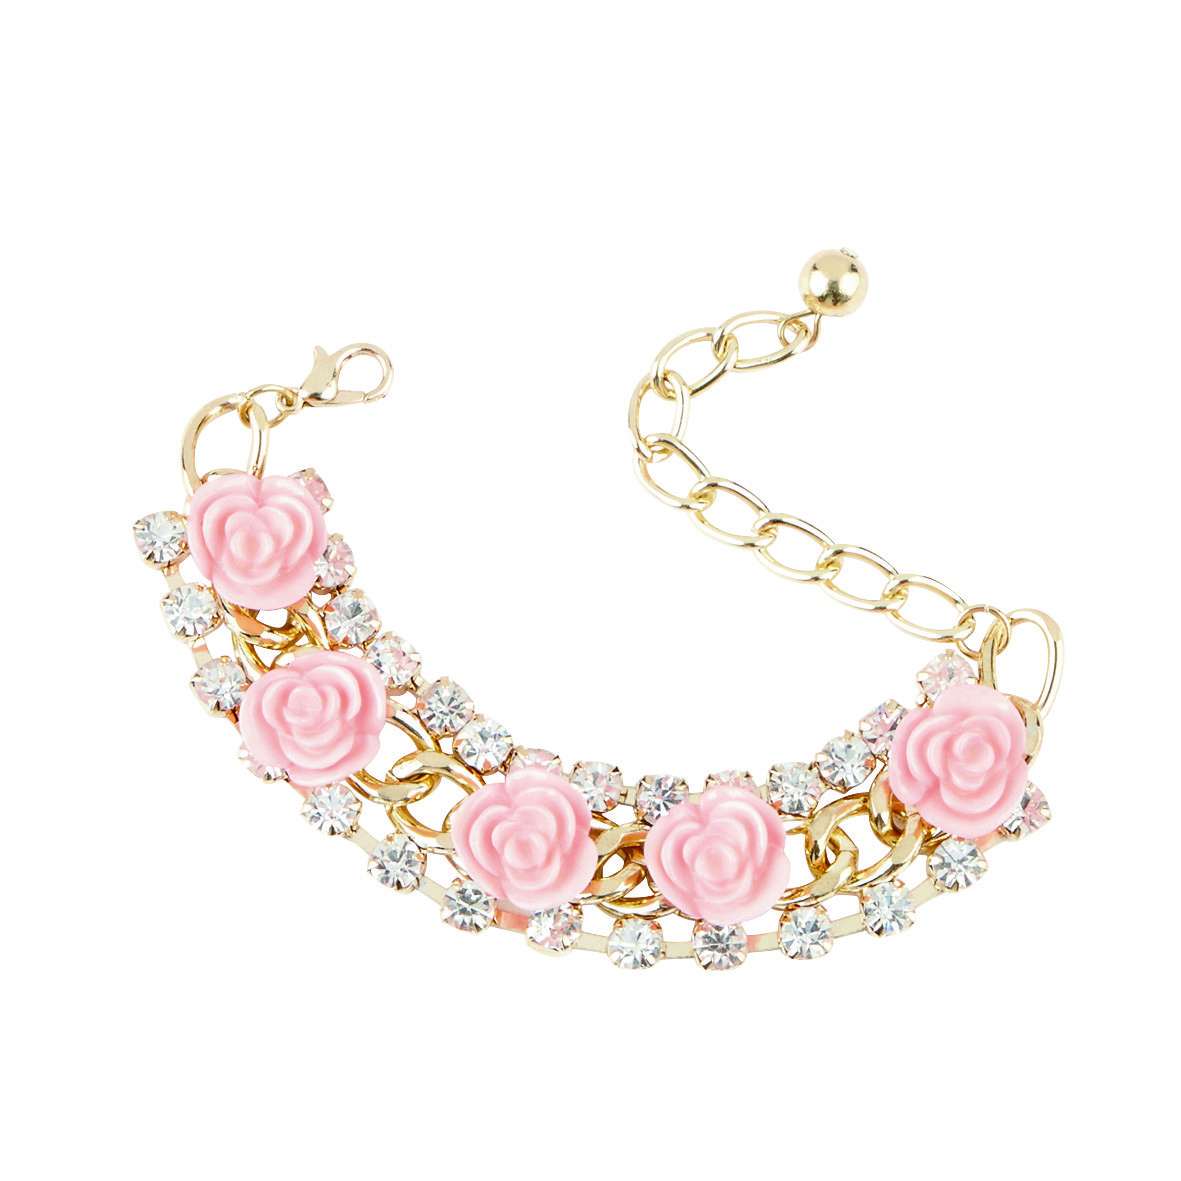 The Warehouse Diamante Flower Chain Bracelet $15